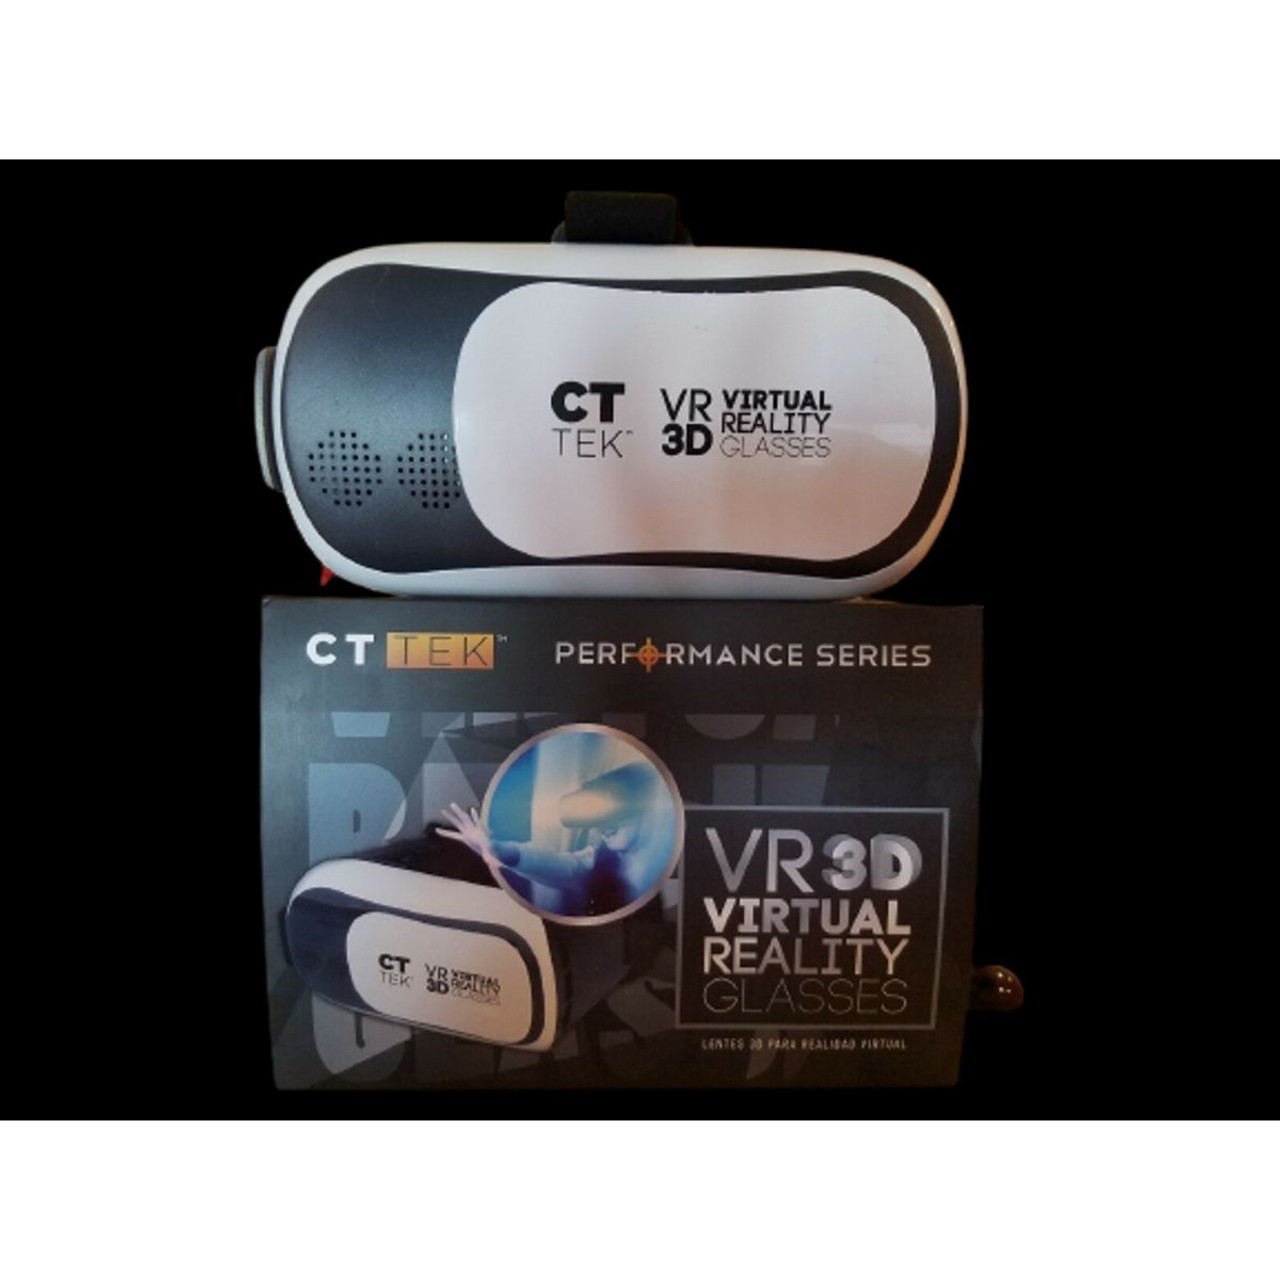 CTTEK Performance Series VR 3D Glasses product image